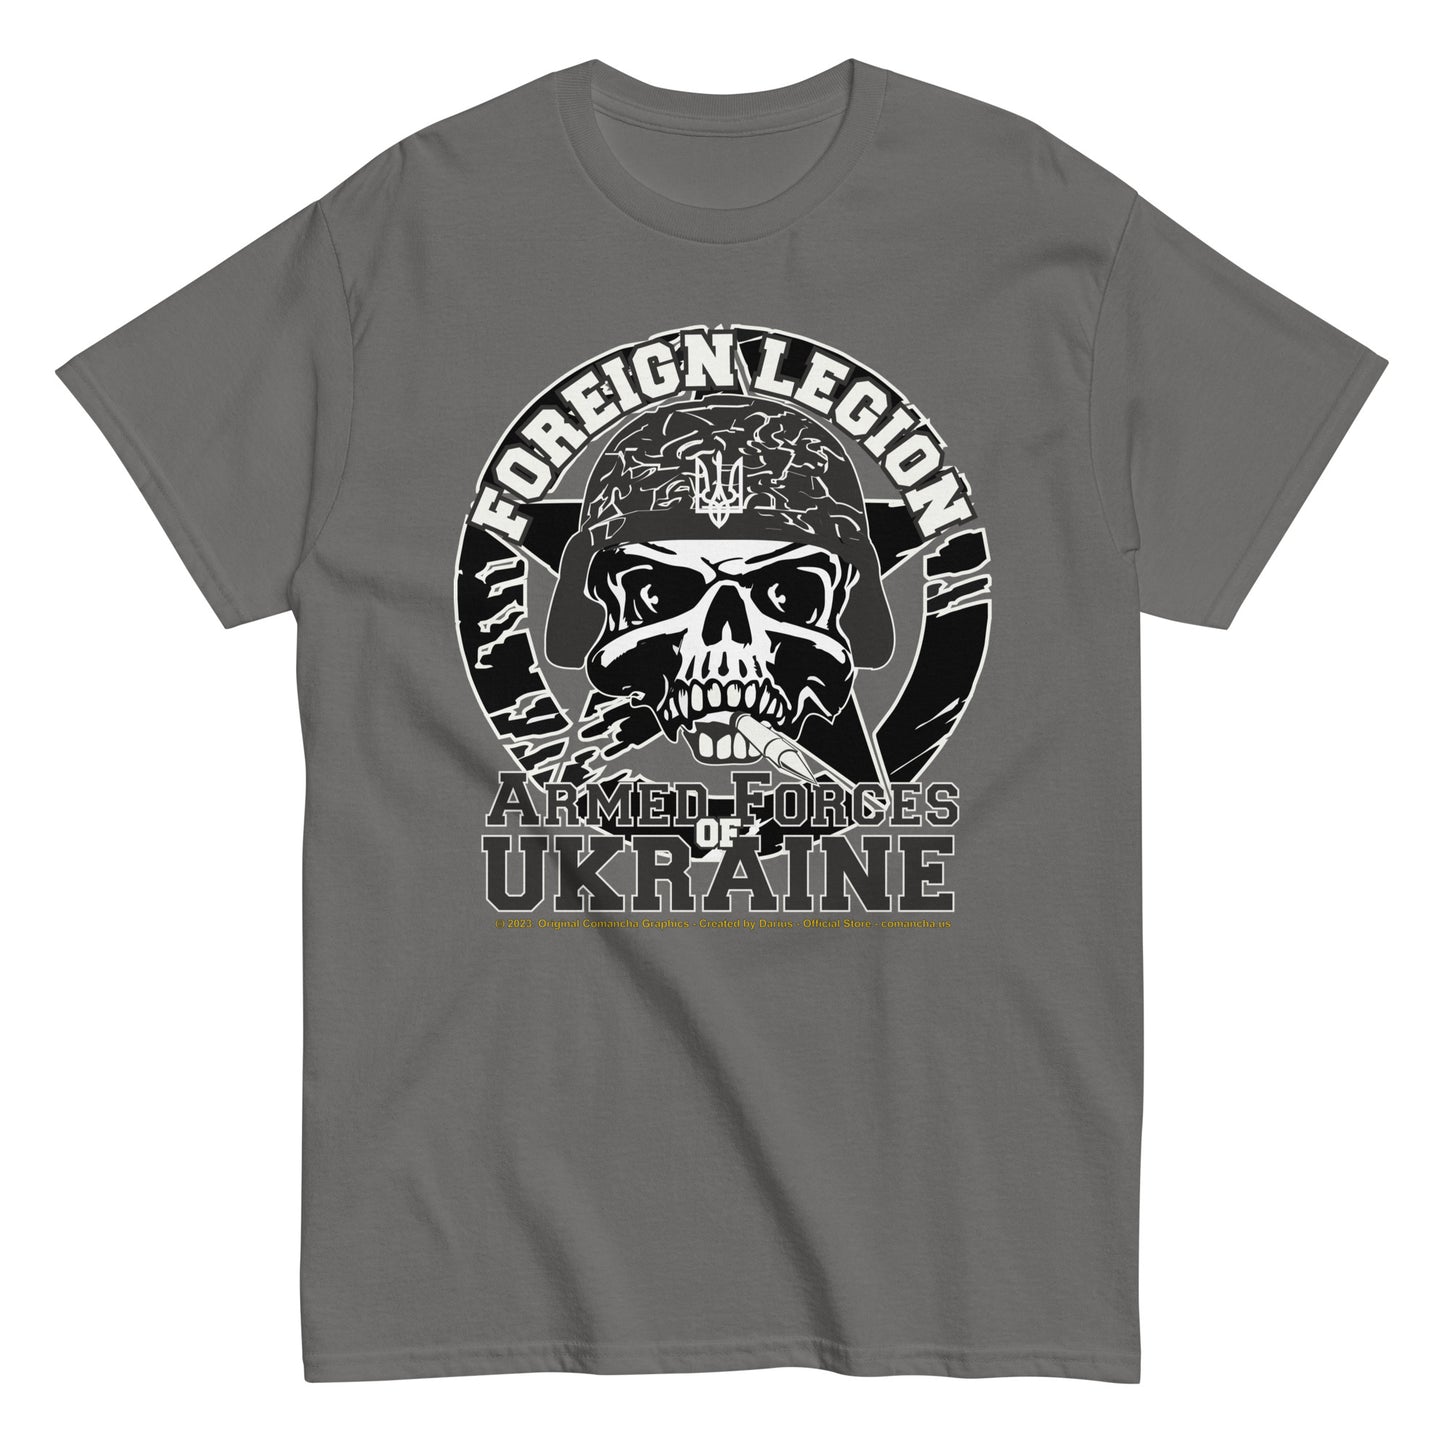 Foregin Legion T-shirt, Save Ukraine t-shirt